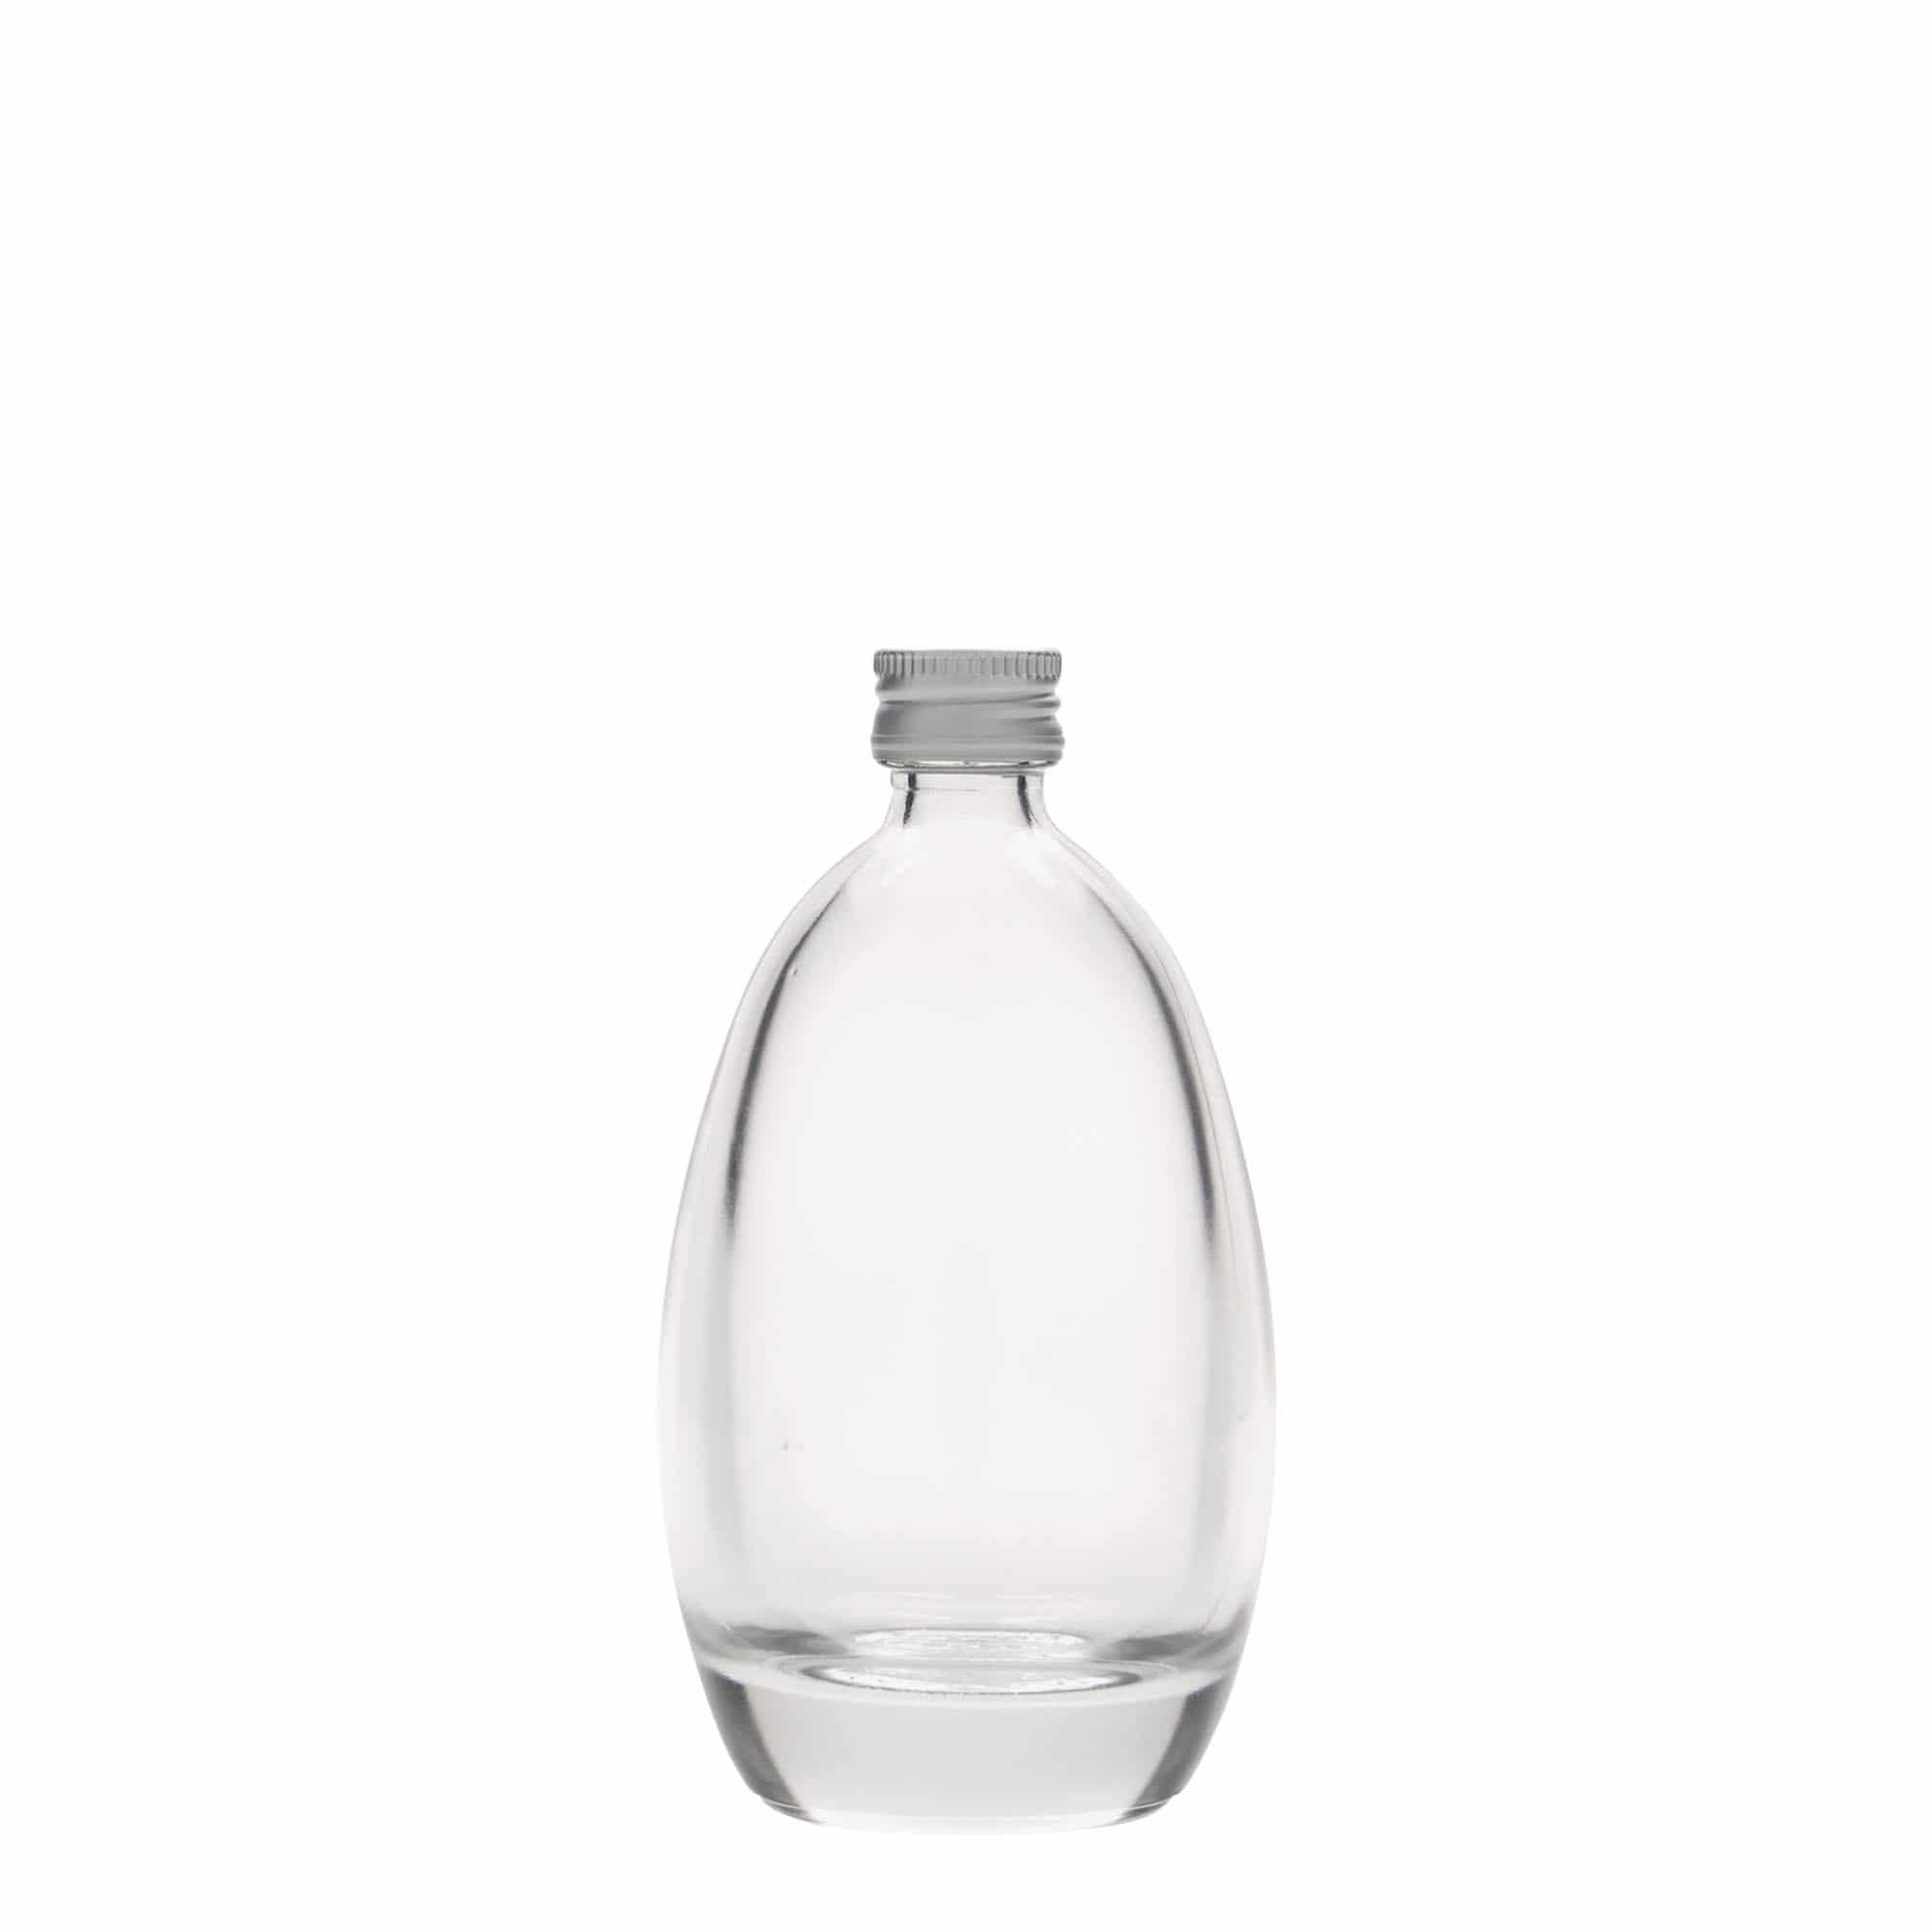 100 ml glass bottle 'Ei', closure: PP 18